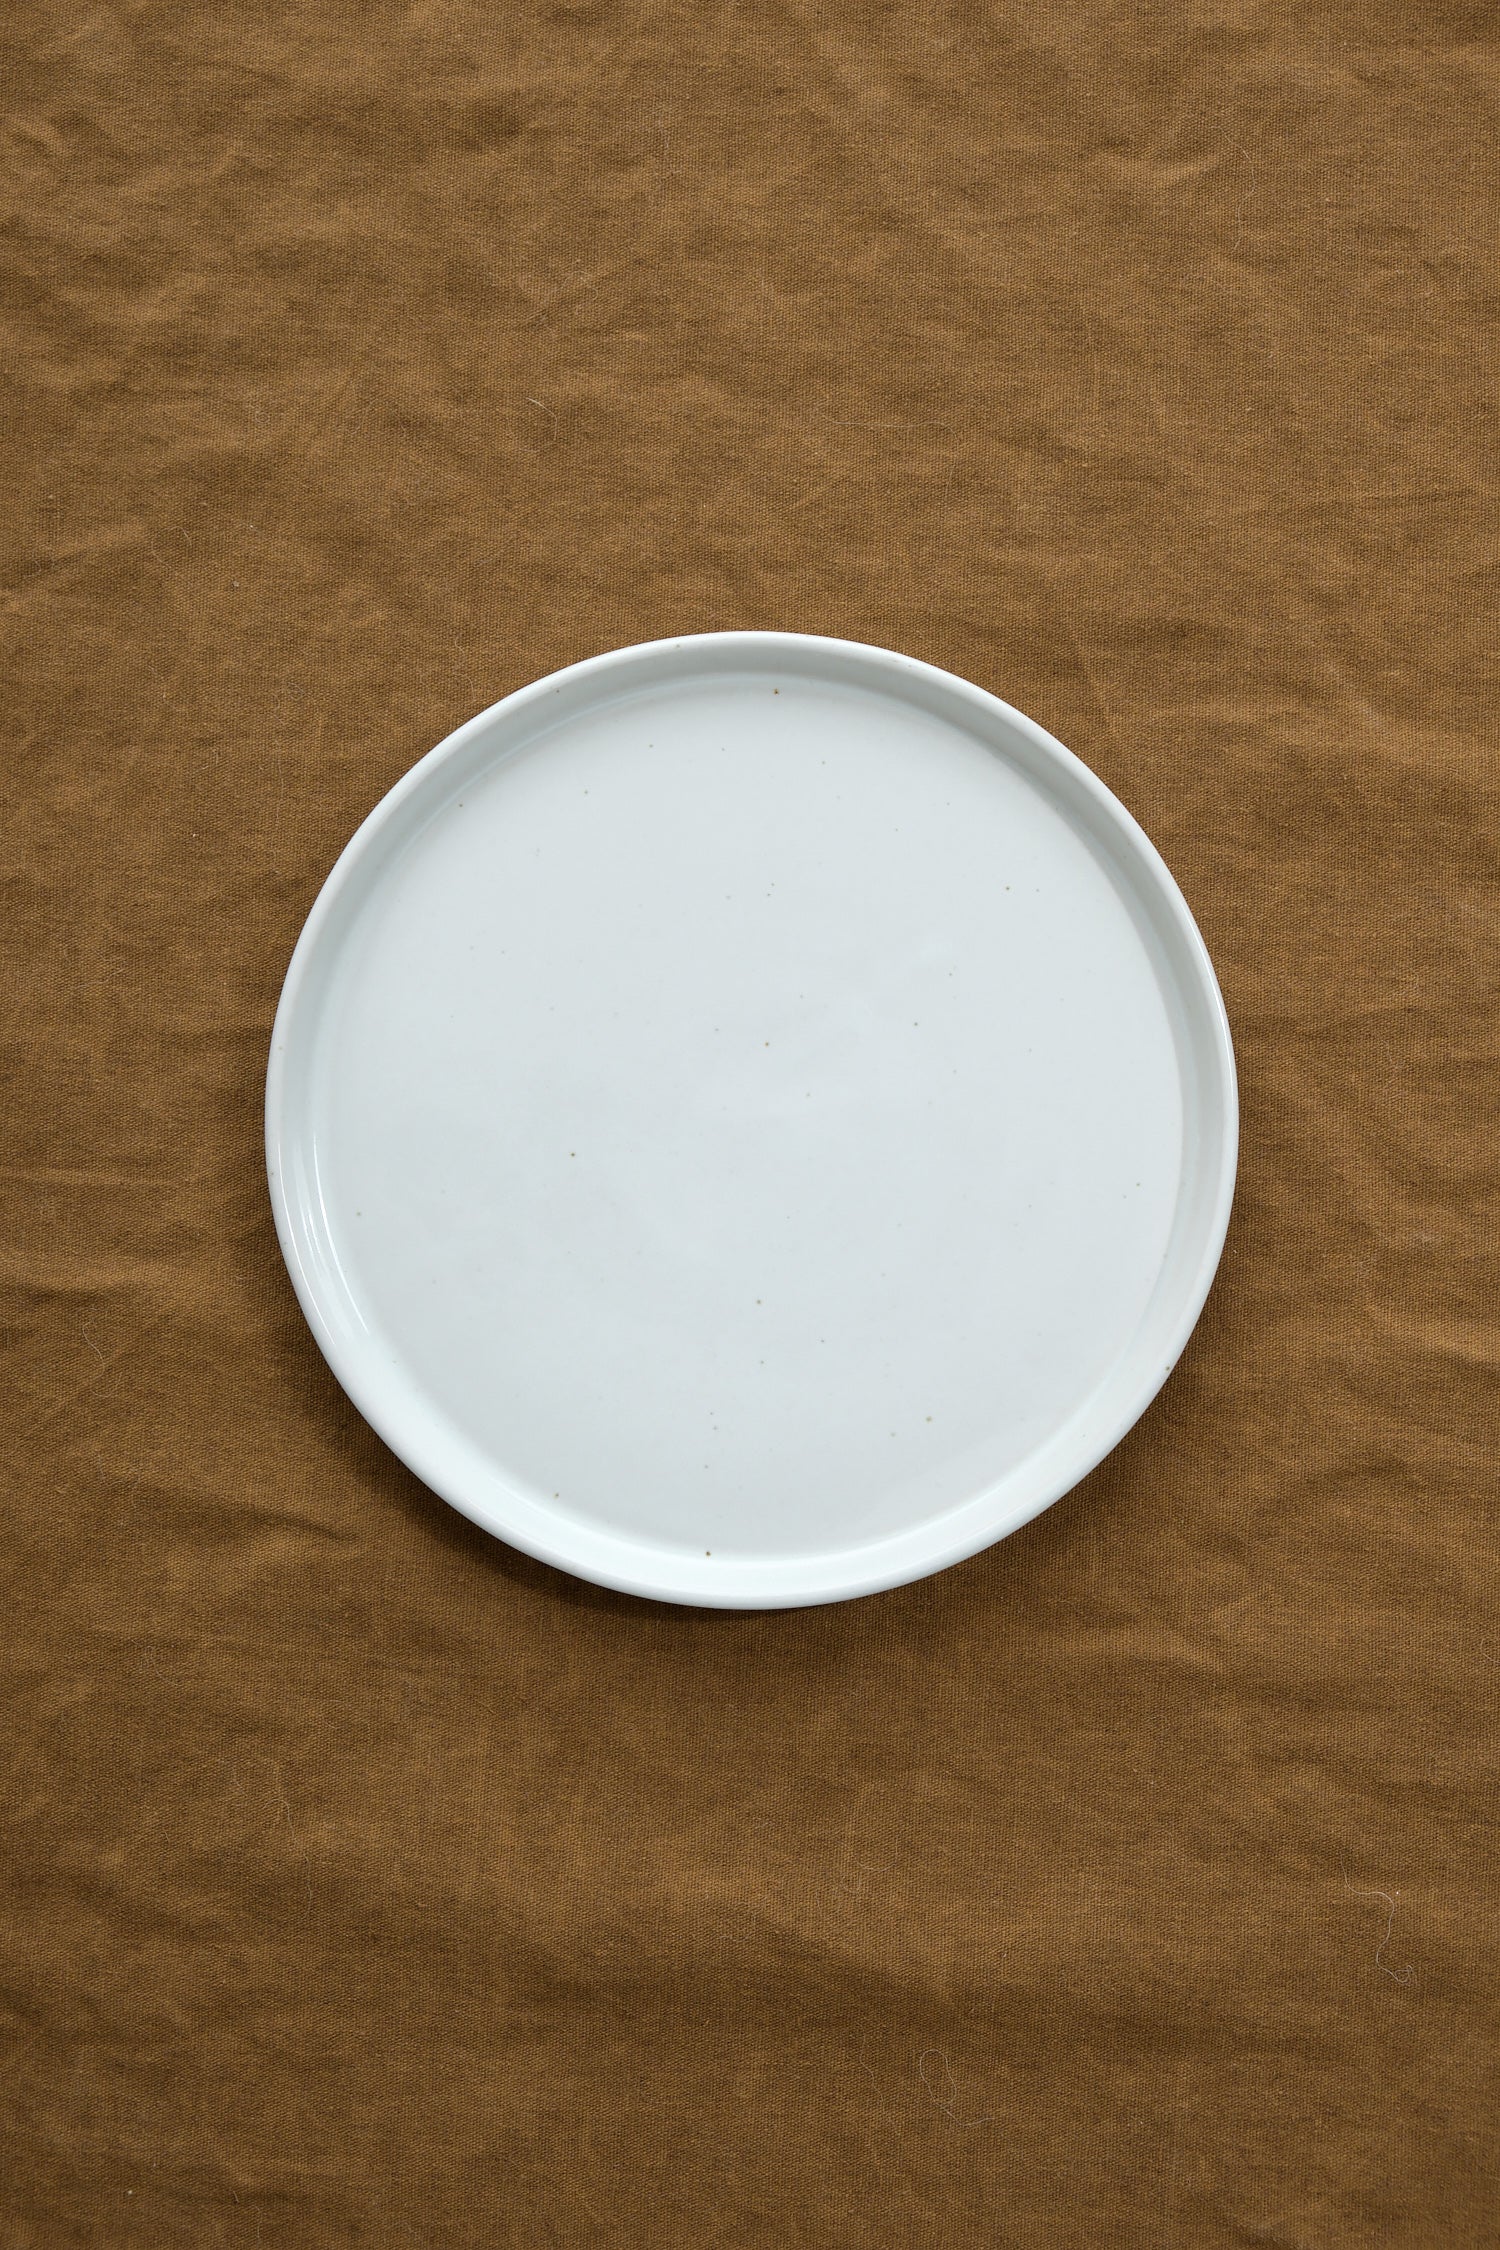 Medium Standard Plate in white